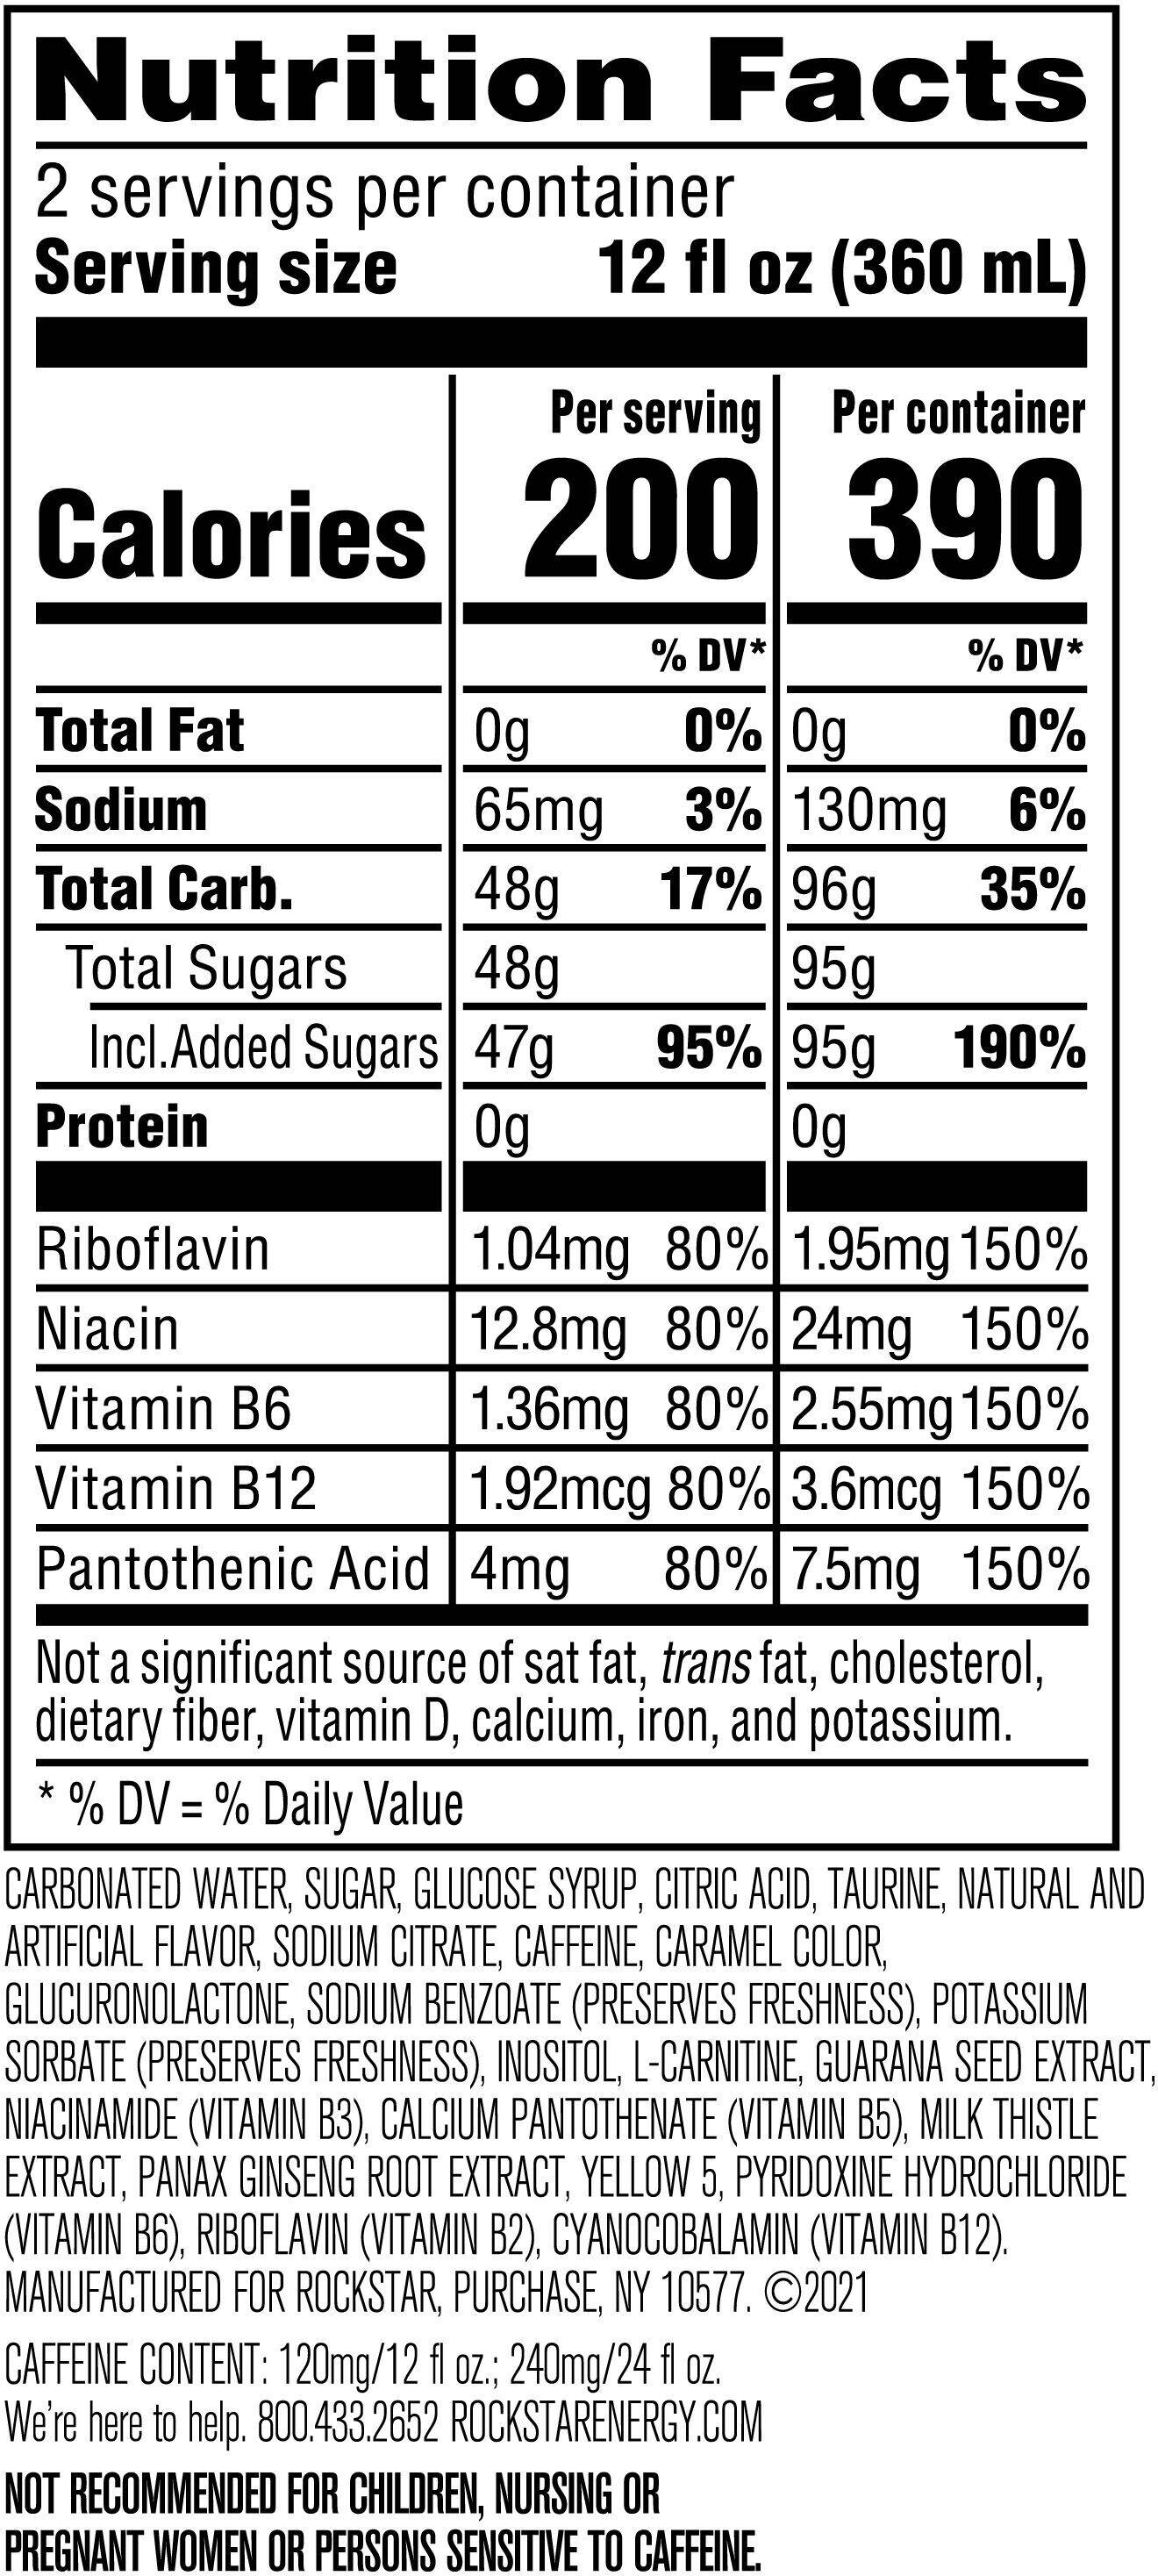 Image describing nutrition information for product Rockstar Energy Original